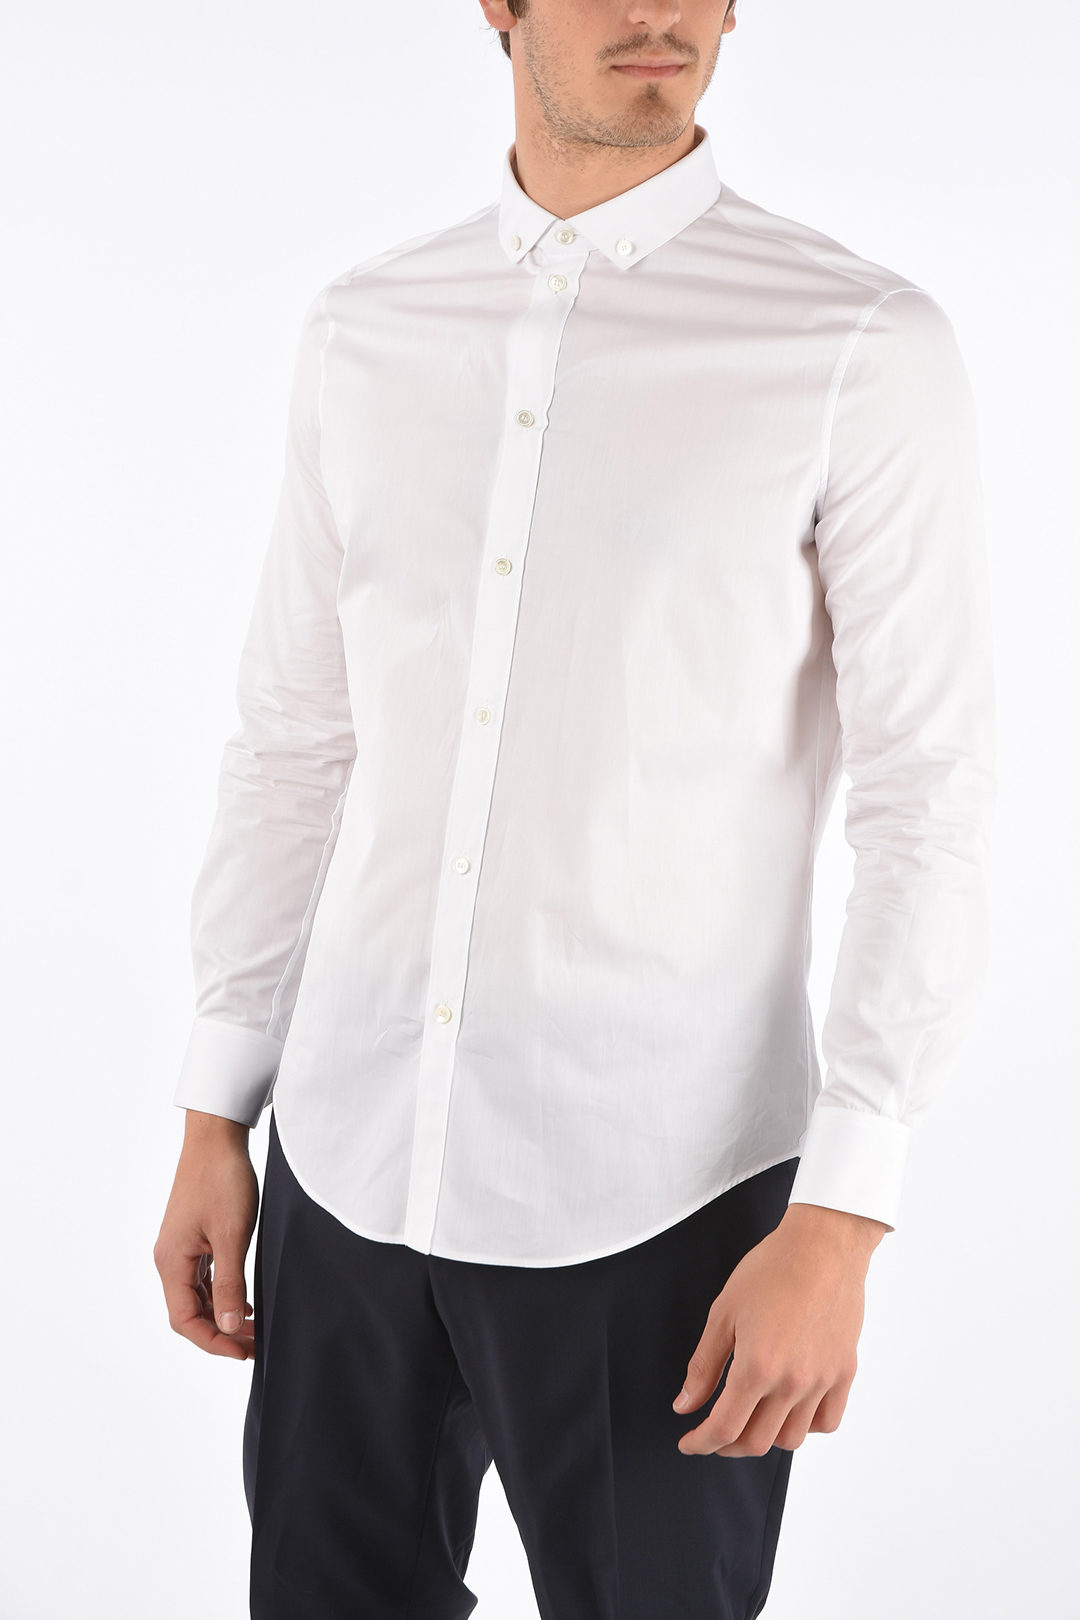 Celine long sleeve button-down collar shirt men - Glamood Outlet